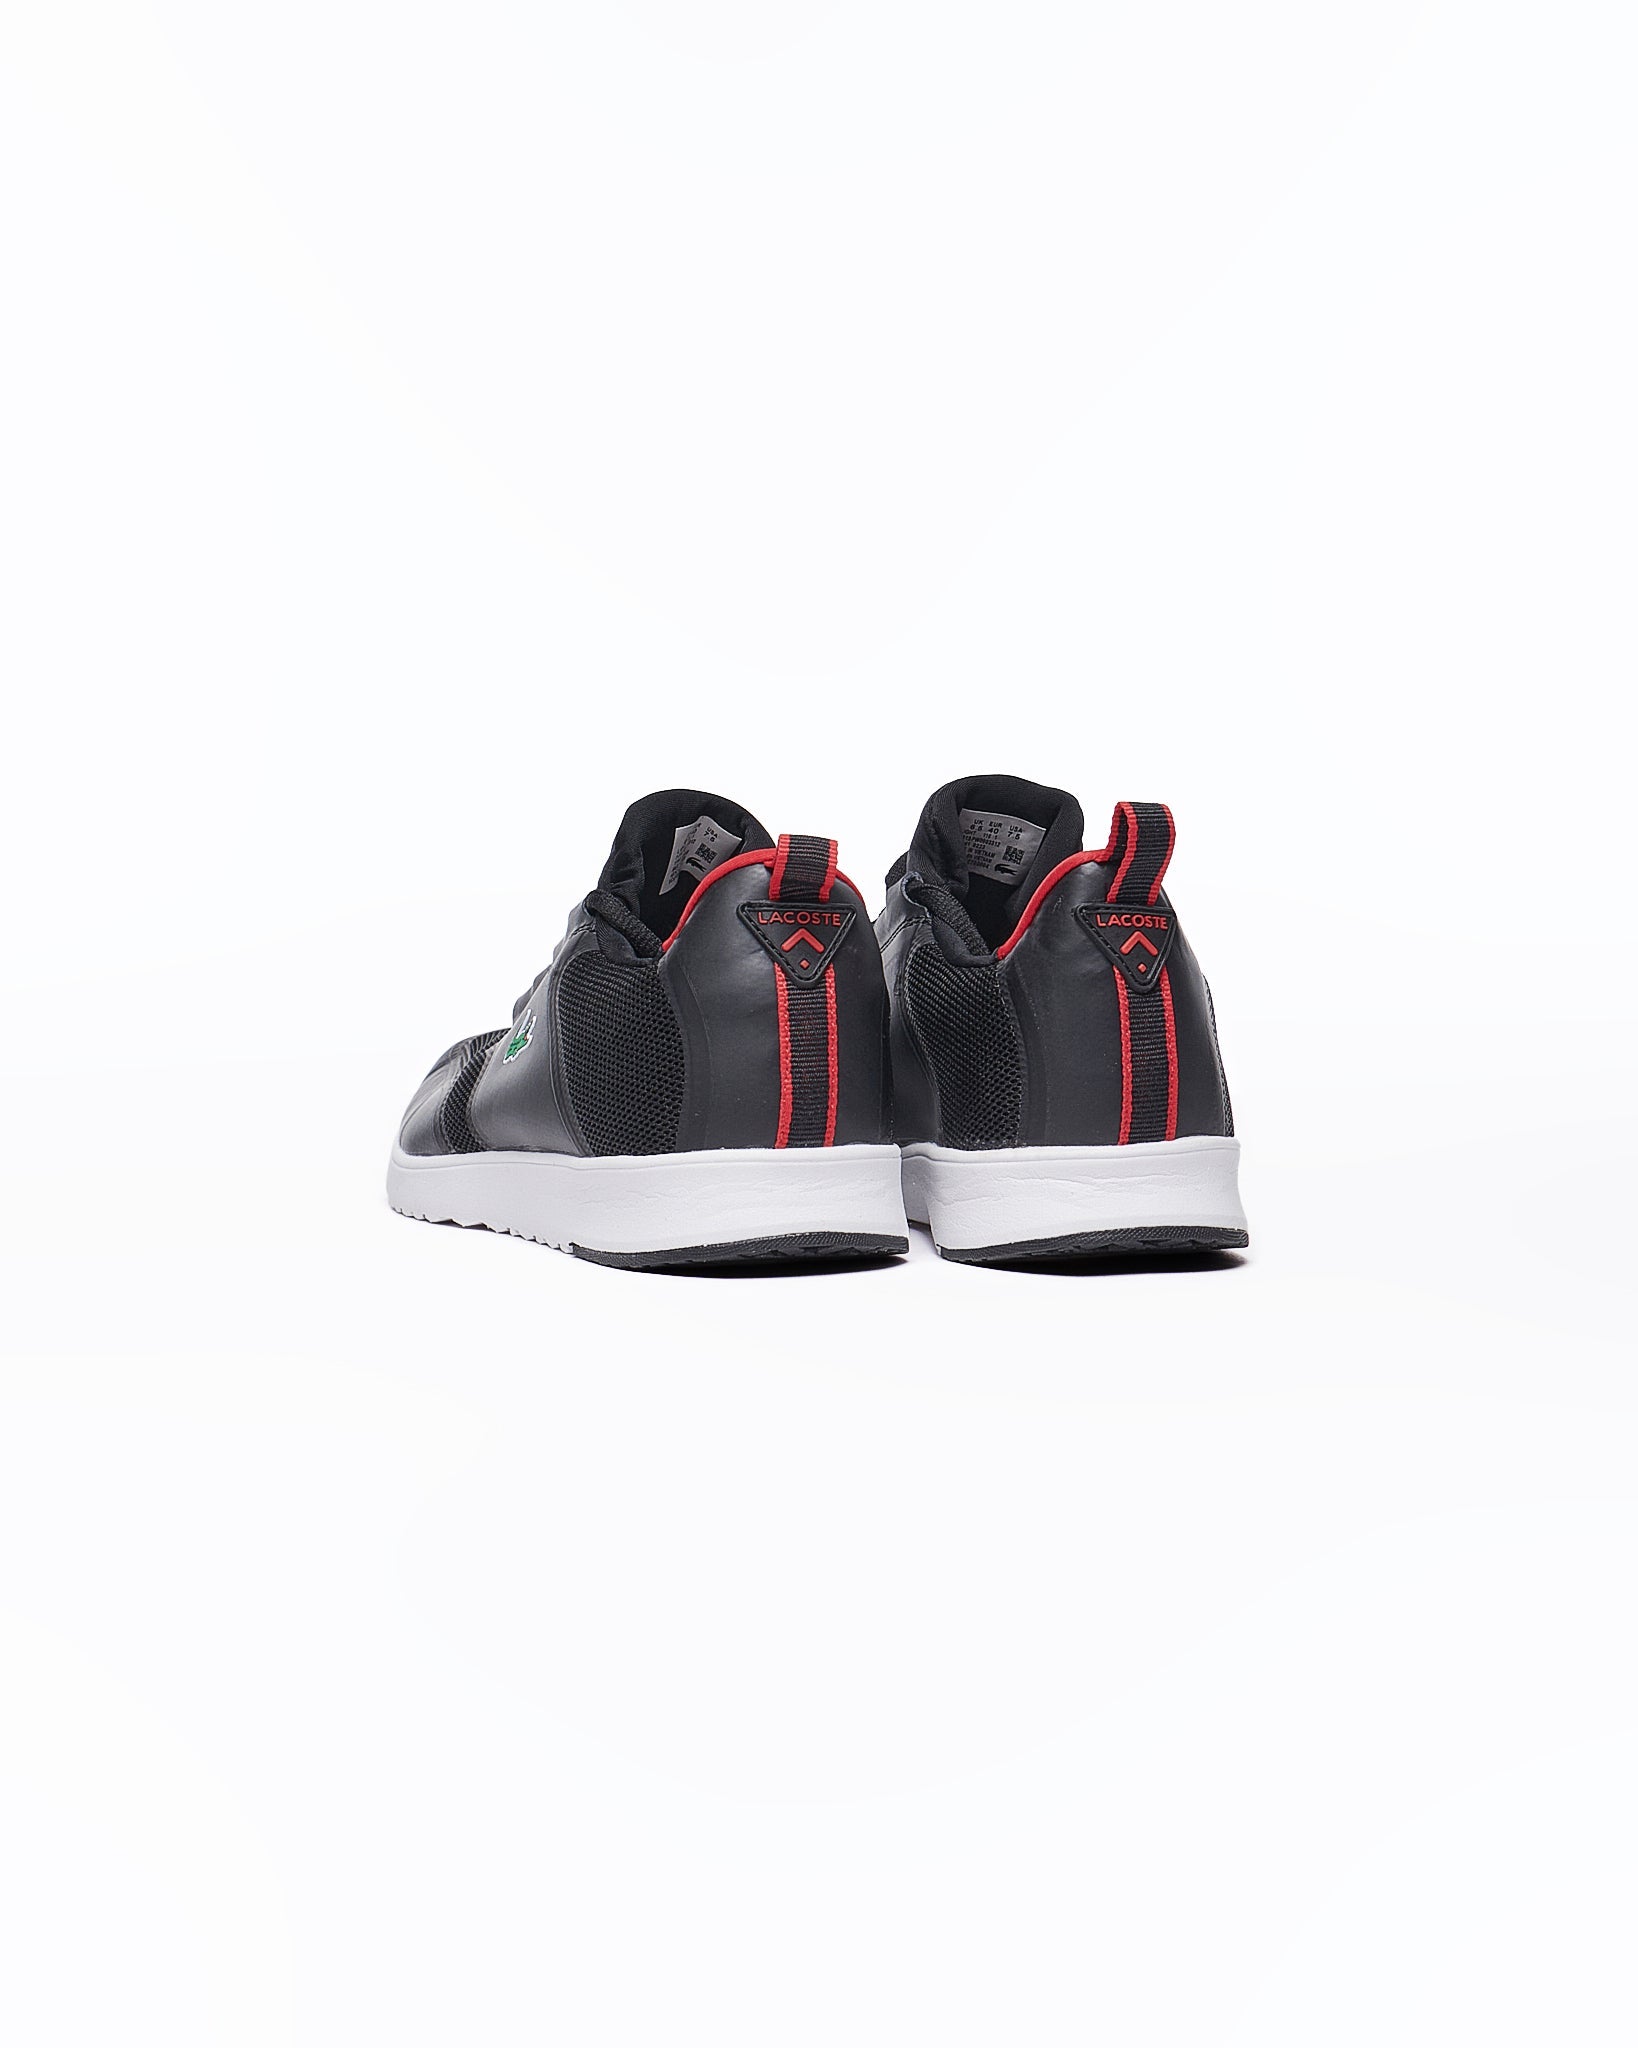 MOI OUTFIT-LAC Leather Color Contrast Men Black Sneakers Shoes 32.90